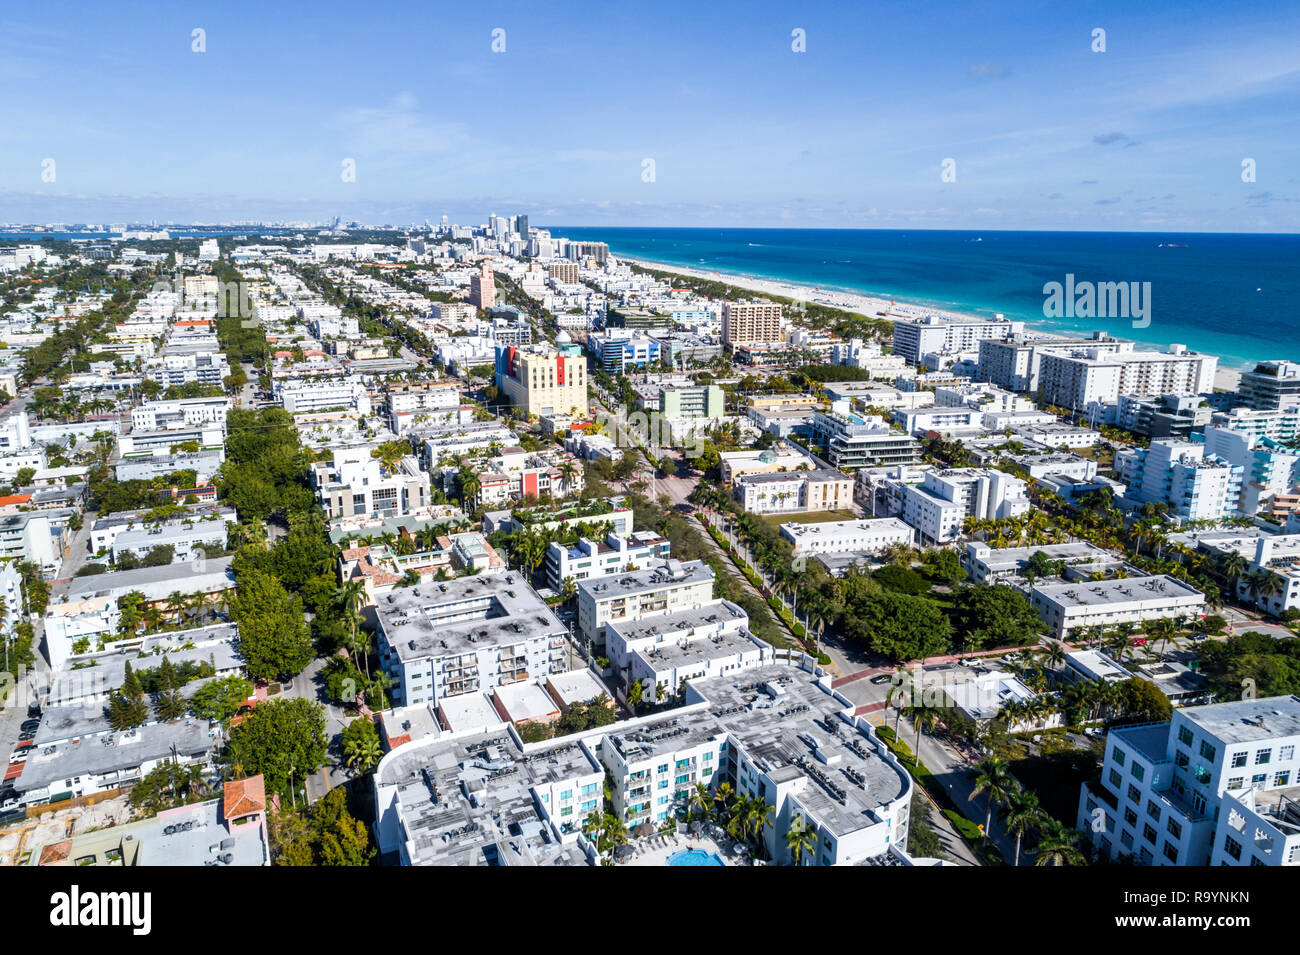 Miami Beach Florida,aerial overhead view from above,Atlantic Ocean,condominium residential apartment apartments building buildings housing,buildings r Stock Photo